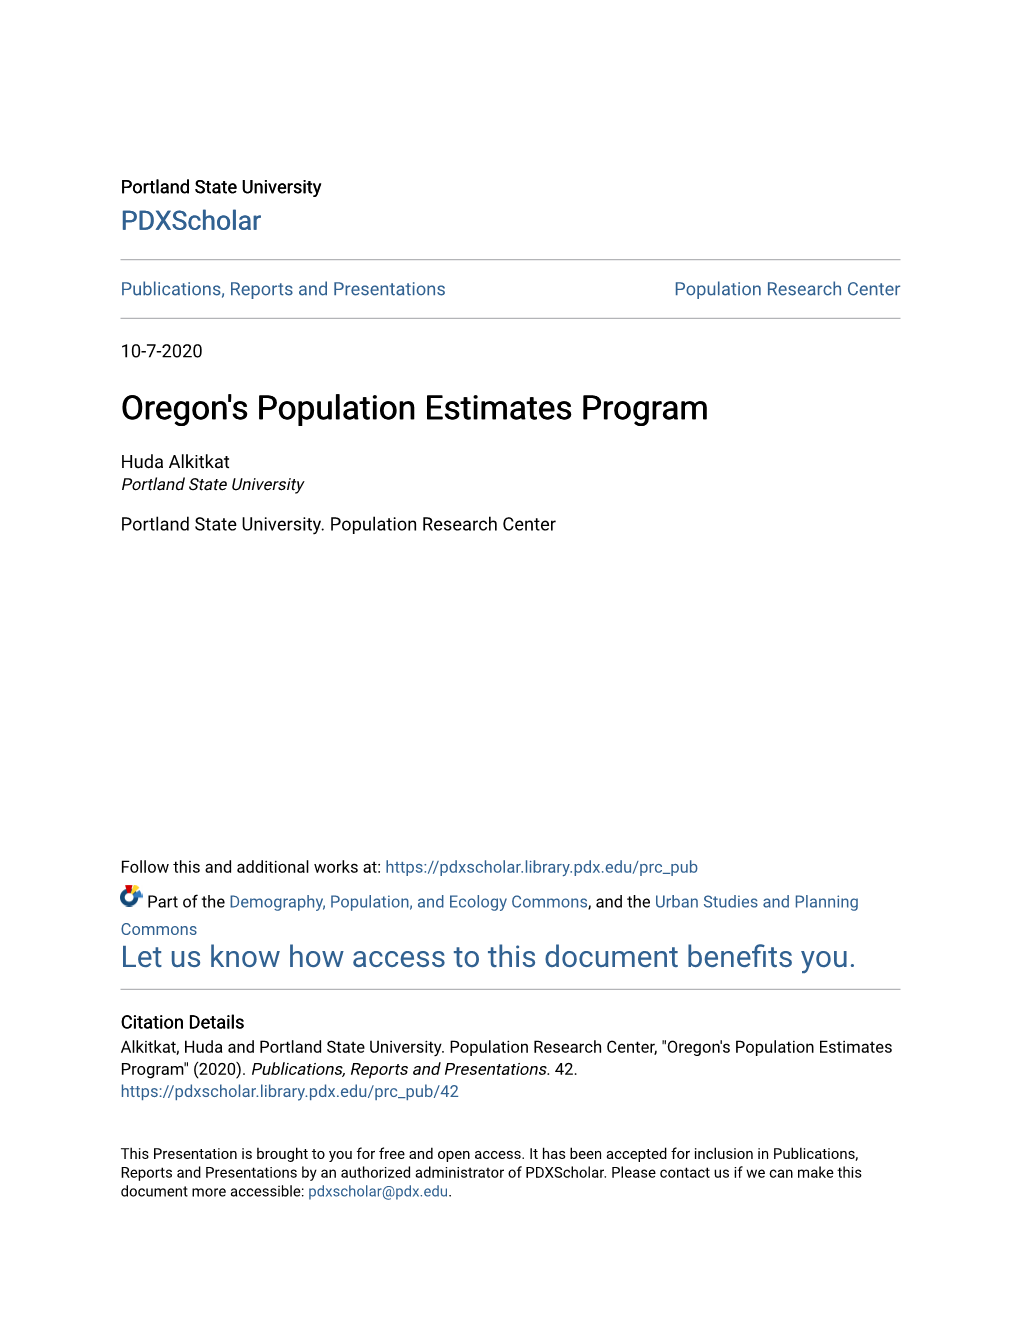 Oregon's Population Estimates Program